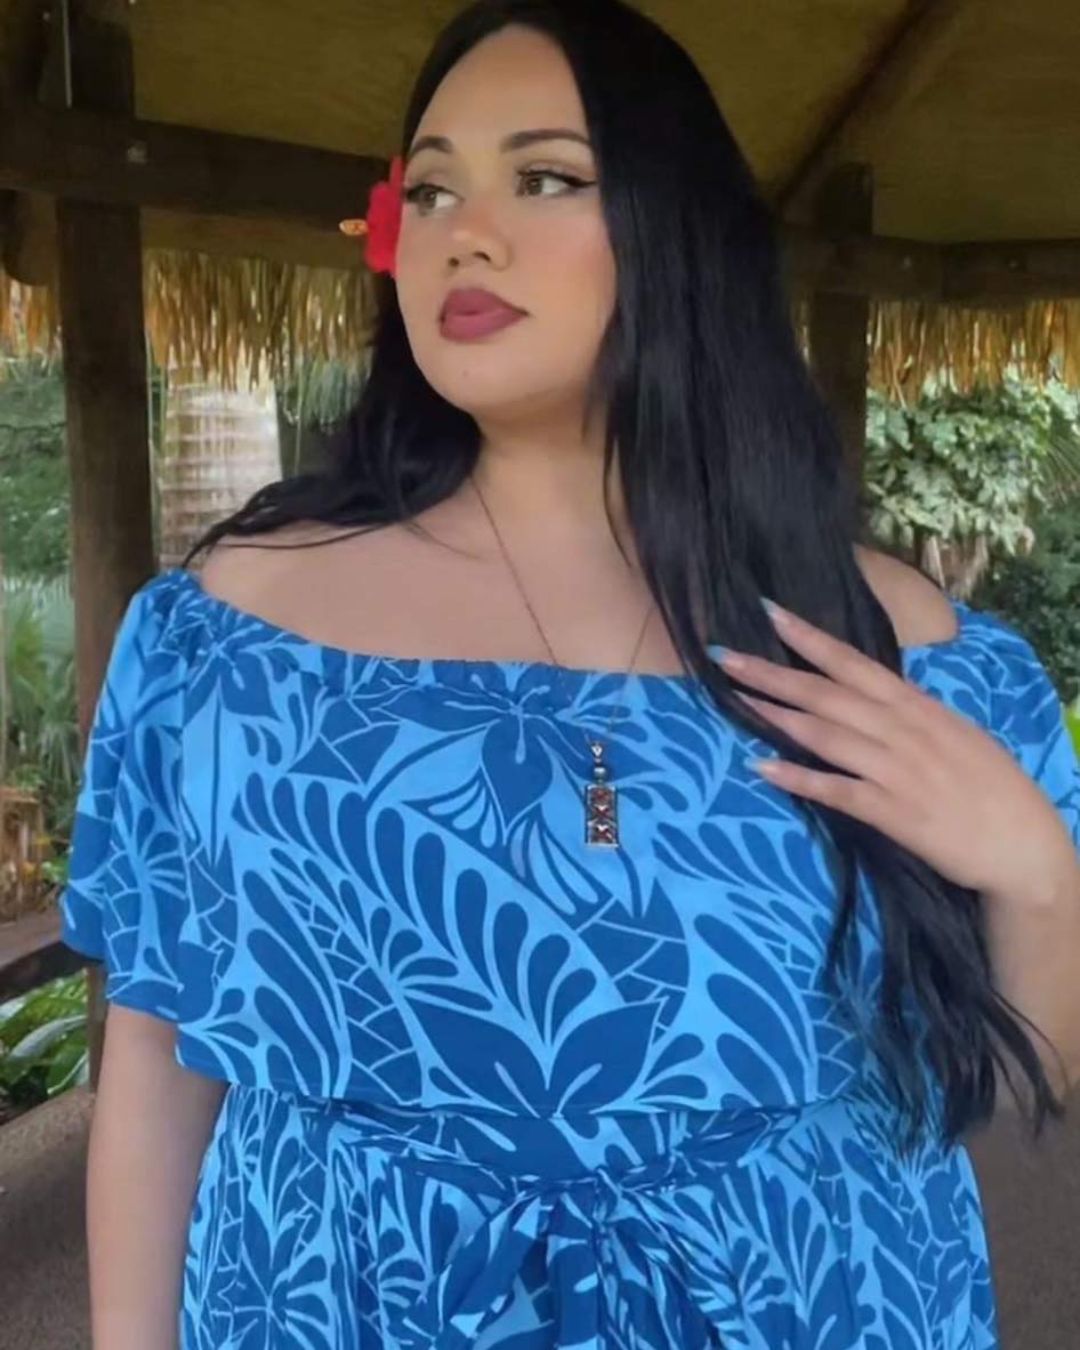 Teuila Womens Off Shoulder Island Dress - Lagoon Blue Print